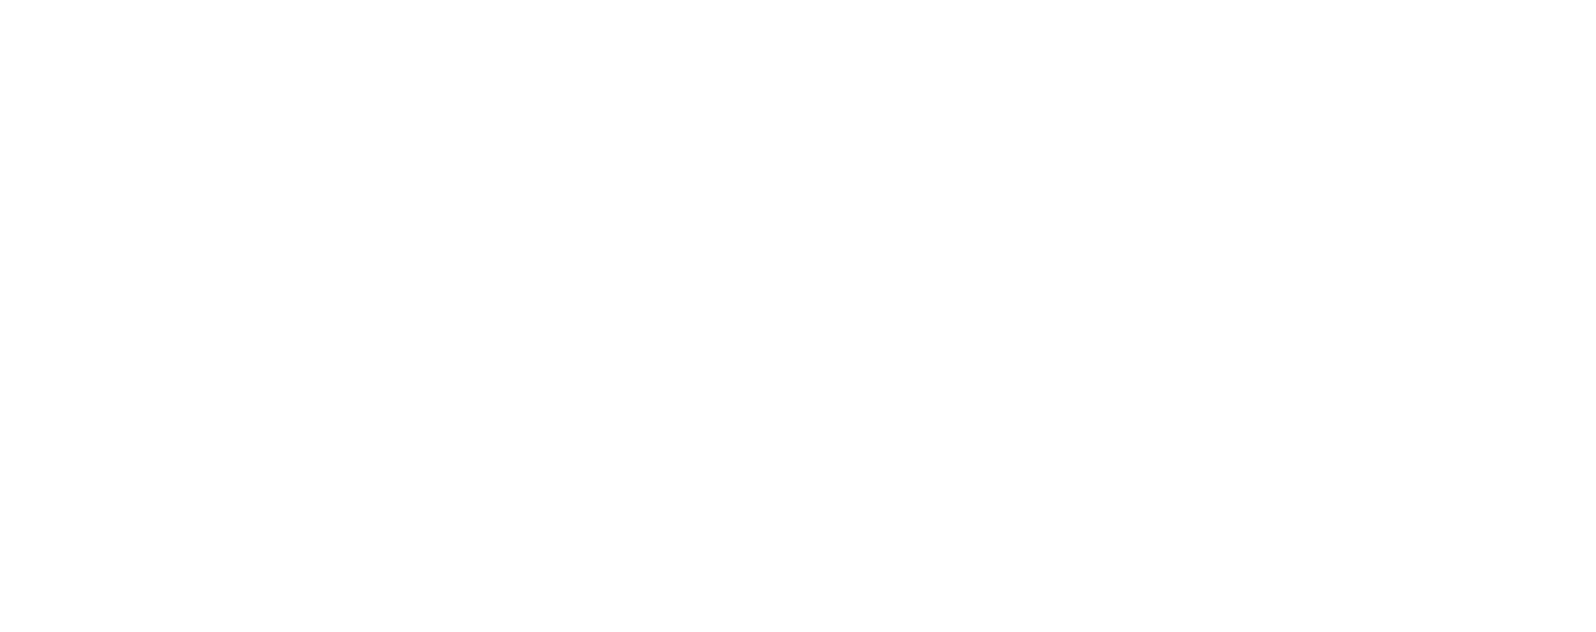 CVRx Logo groß für dunkle Hintergründe (transparentes PNG)